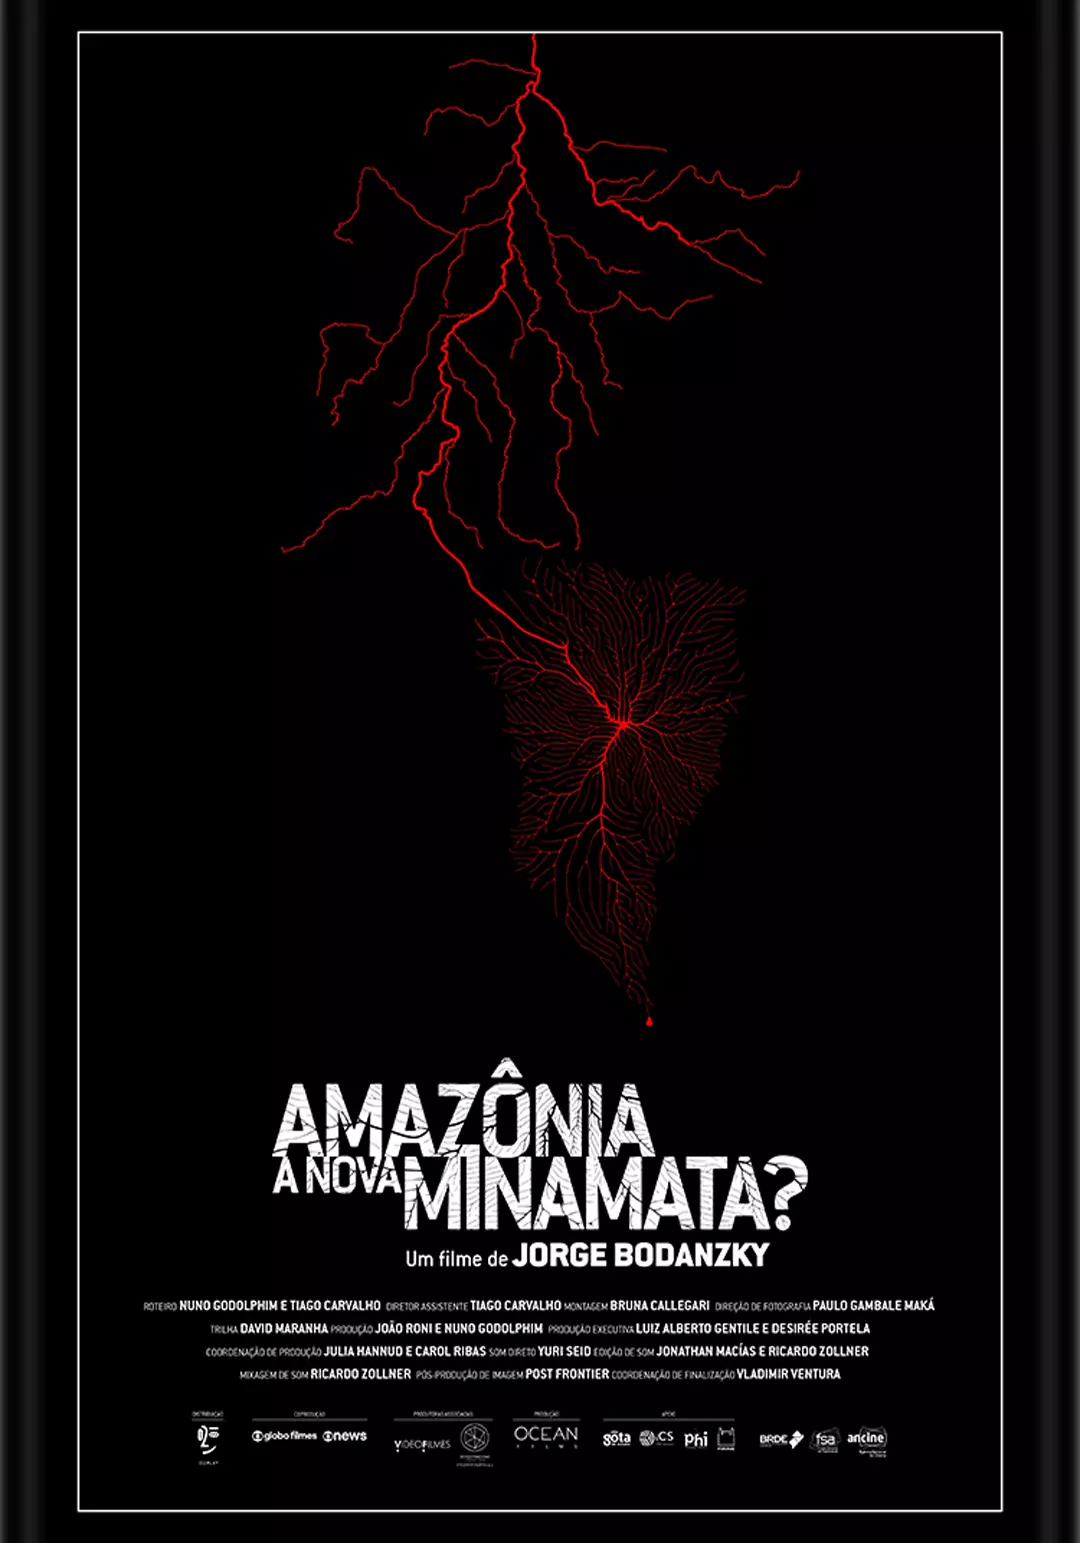 Amazonia. ¿La nueva Minamata?, Jorge Bodanzky, por película, 18 docsmx